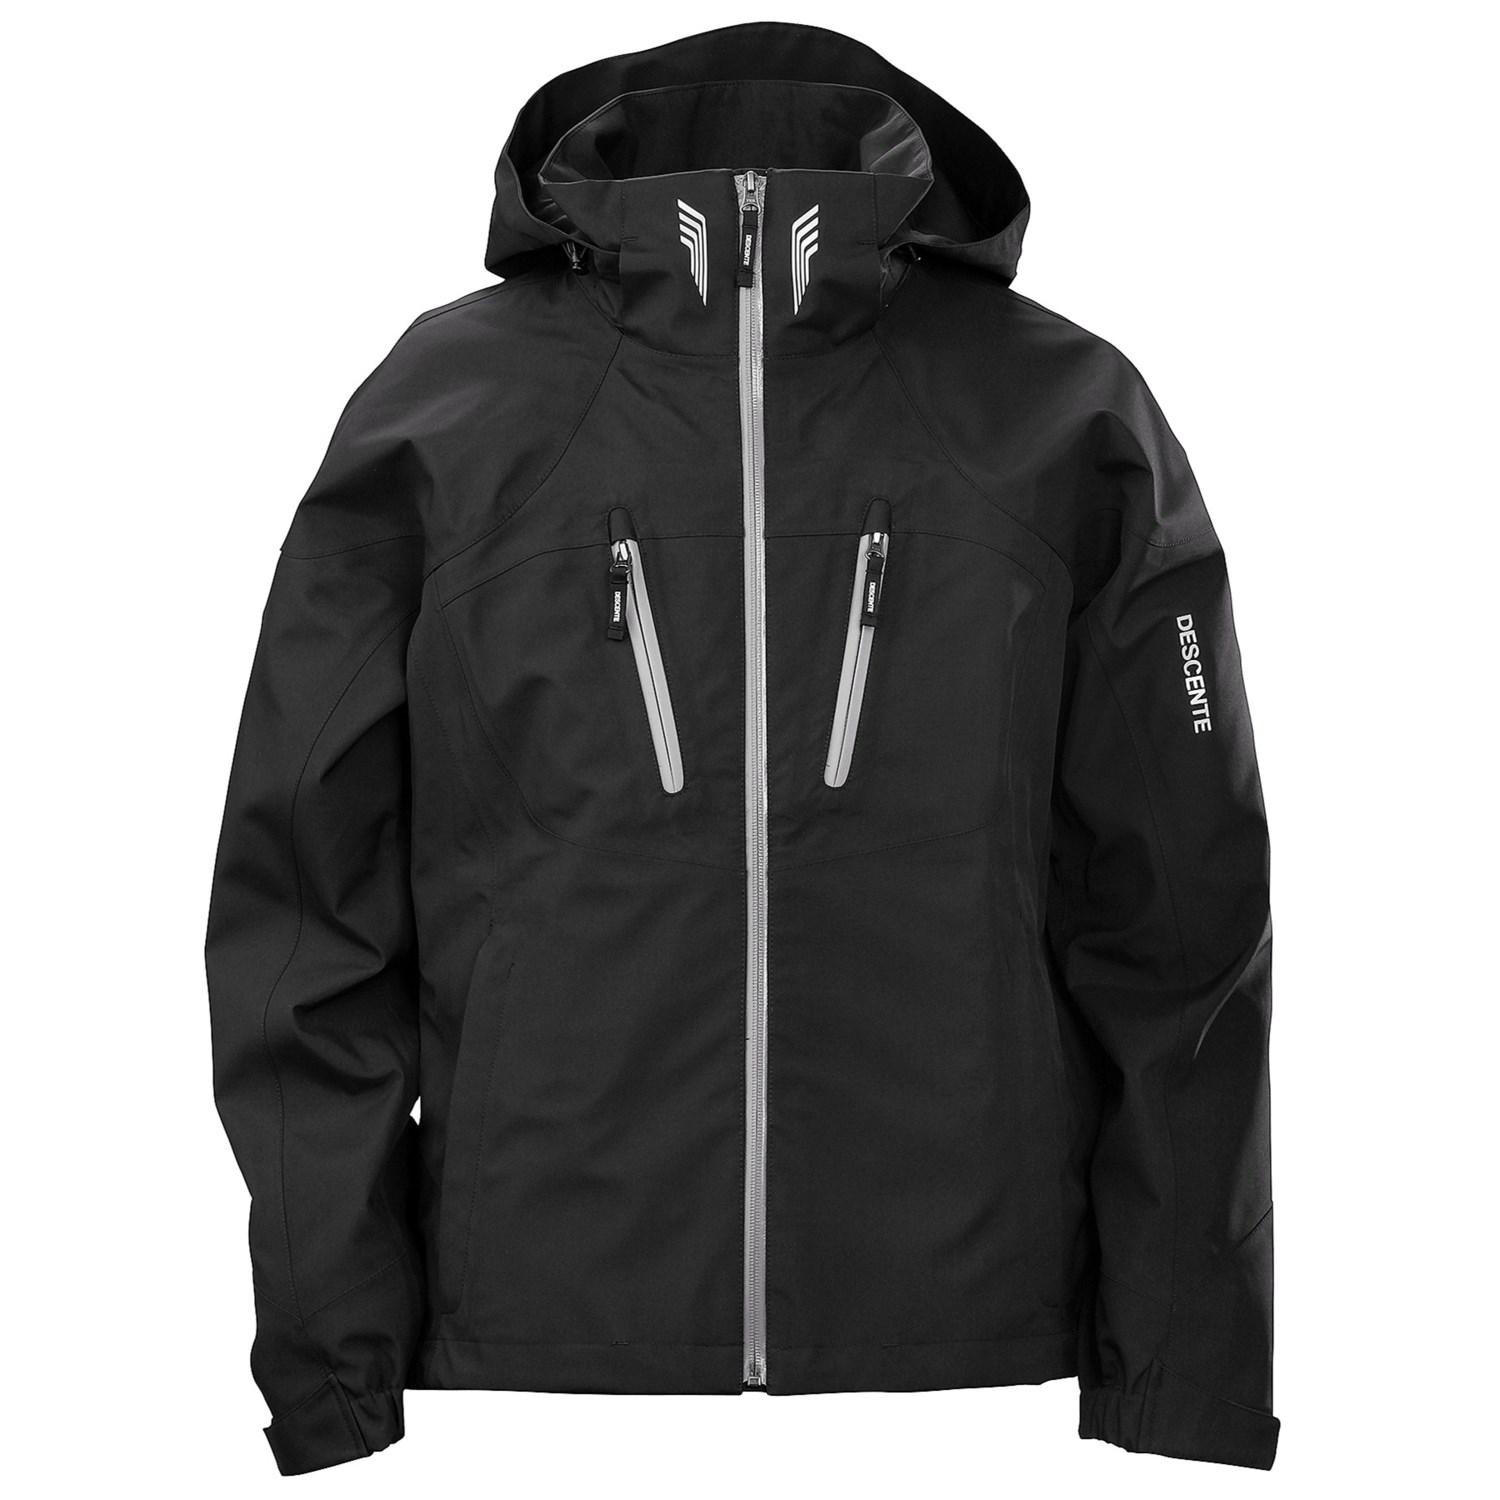 Descente Adventure Ski Jacket - Waterproof (For Men) - Save 30%